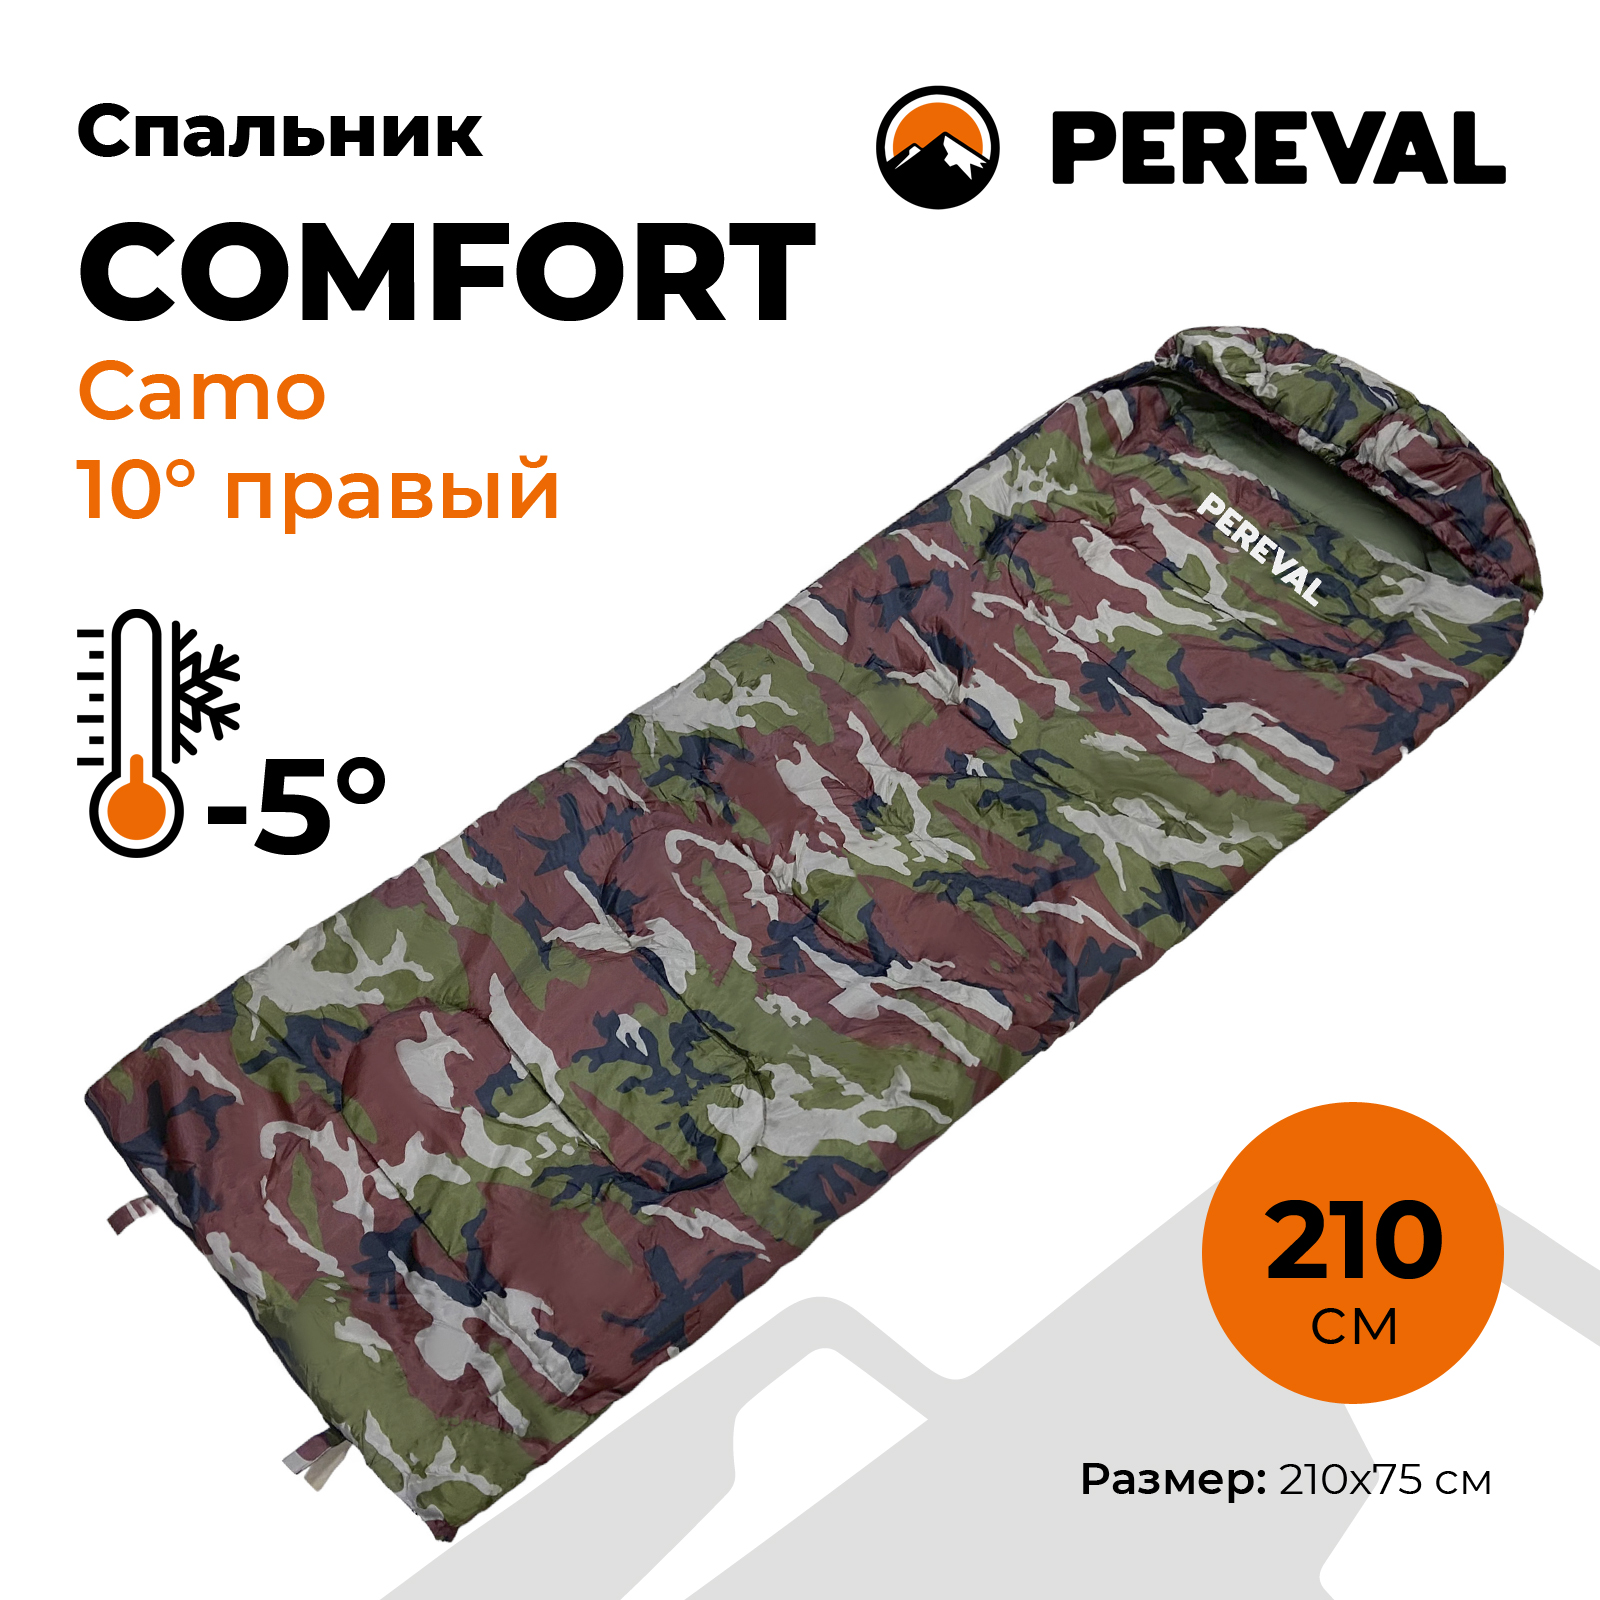 Спальник Pereval Comfort Camo 10° правый - фото 1